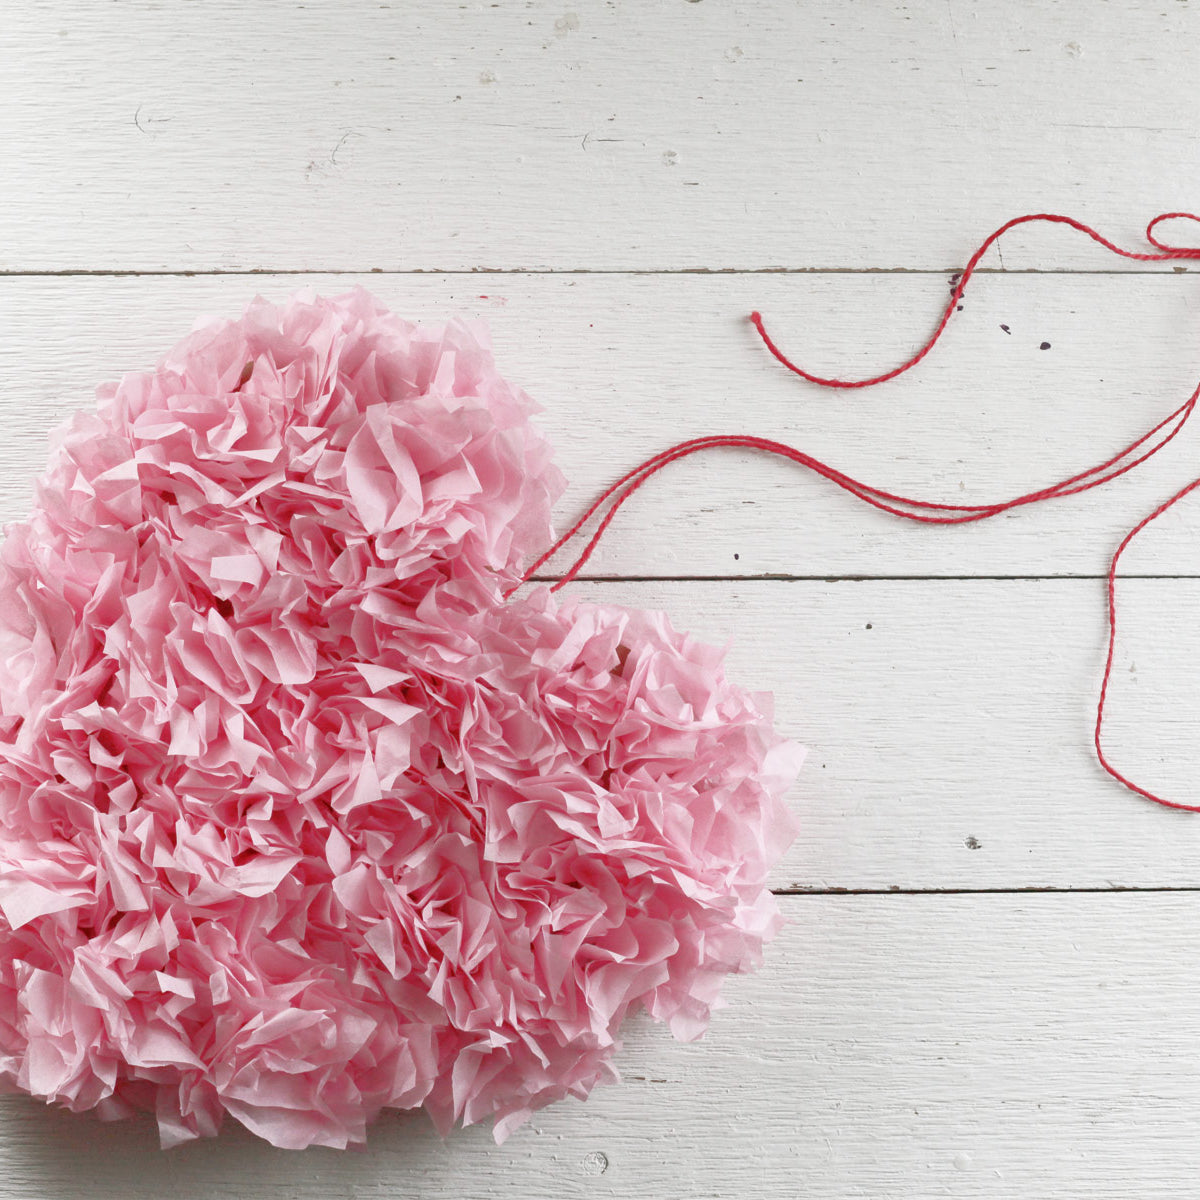 Tissue Paper Puffy Heart Valentine's Window Decoration - DIY Papercraft